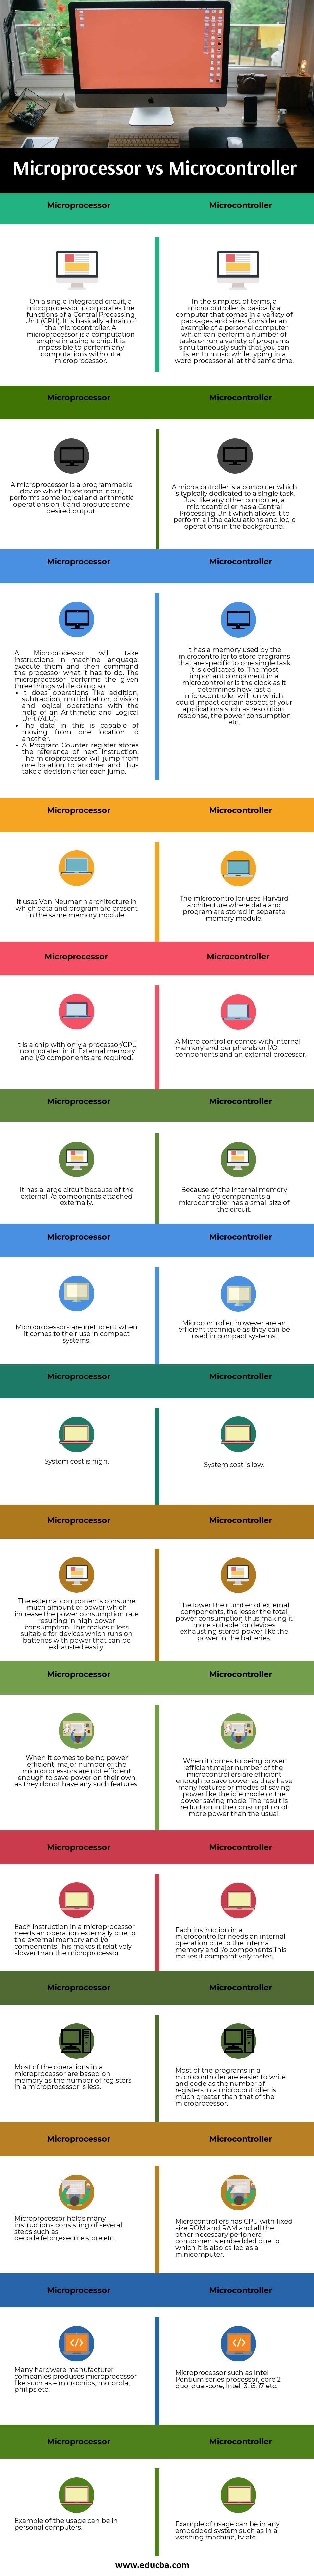 Microprocessor vs Microcontroller info